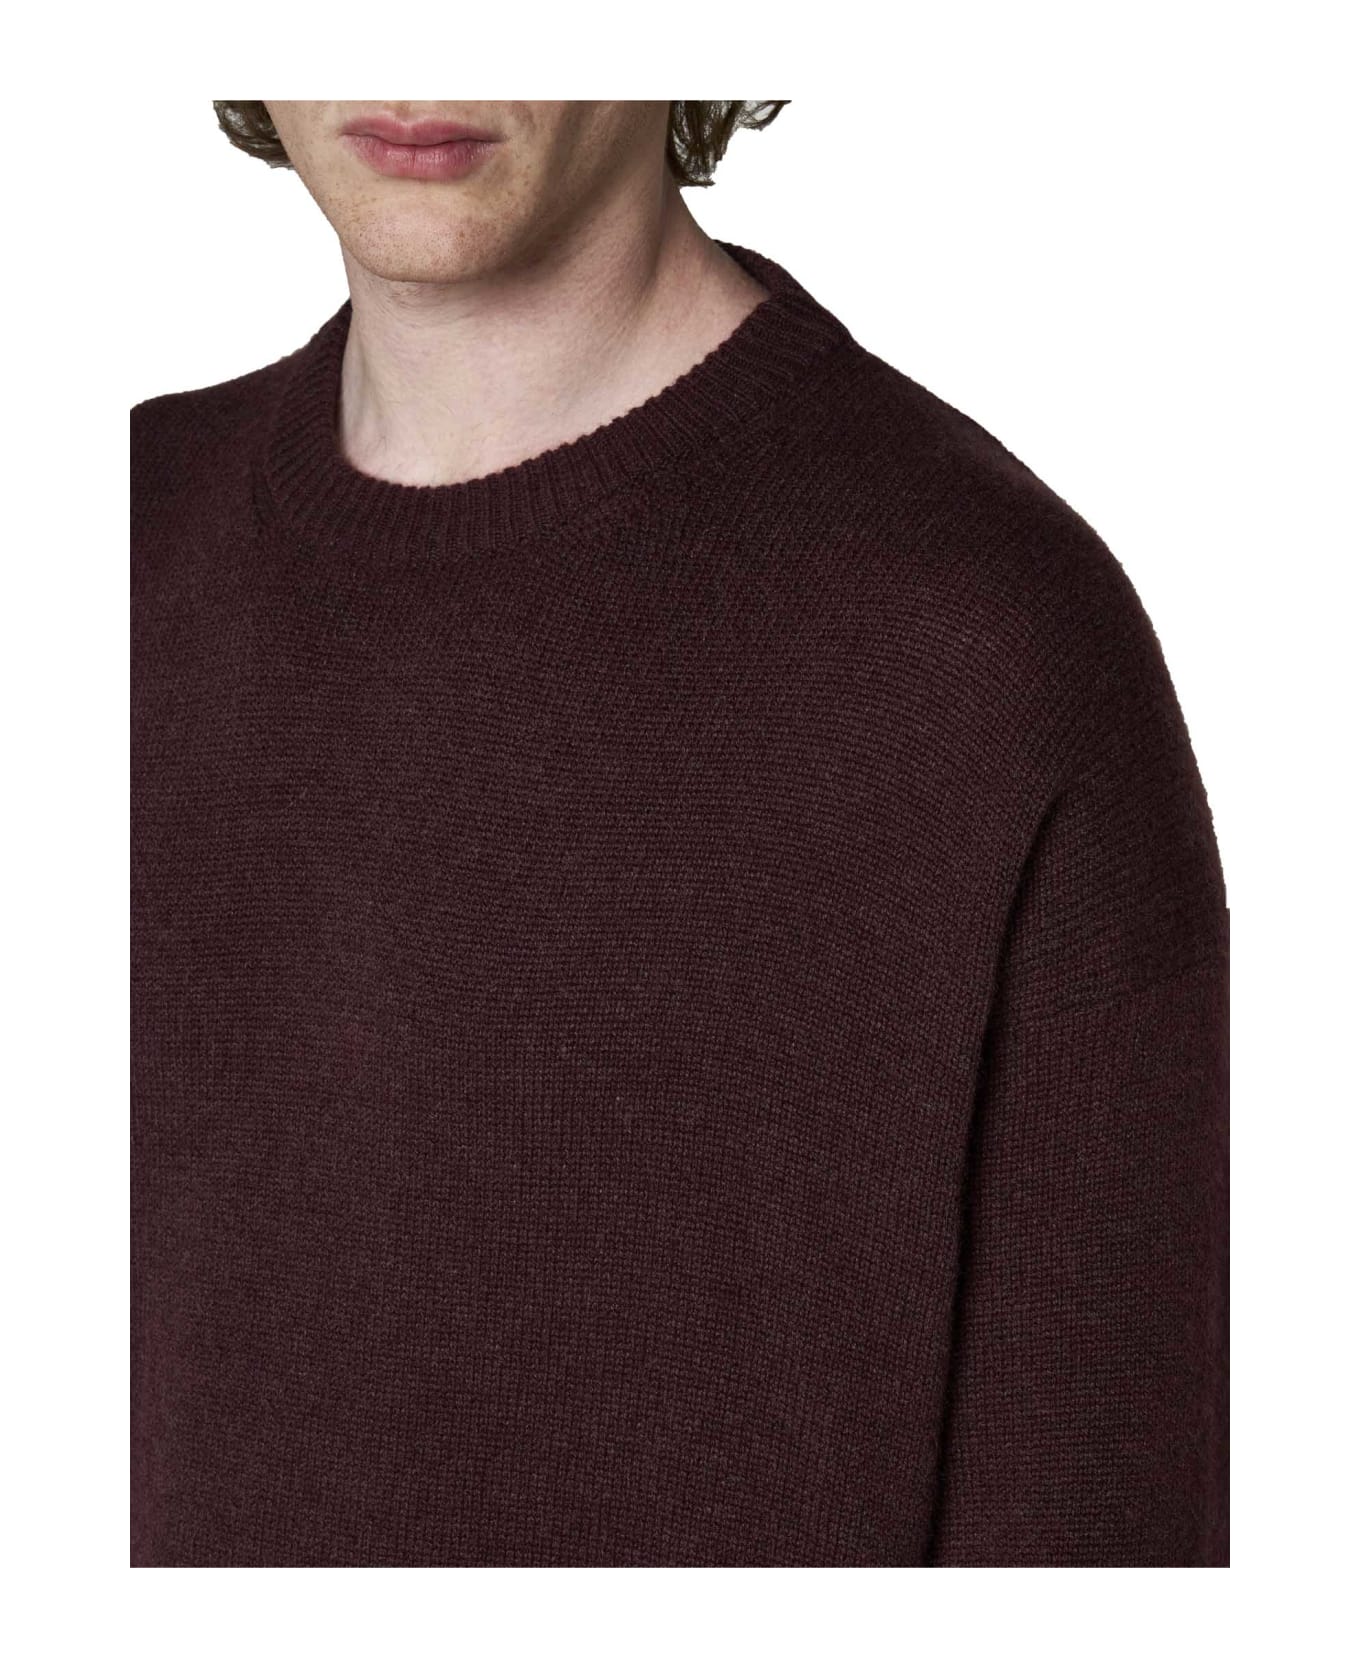 Jil Sander Sweater - Chocolate plum ニットウェア